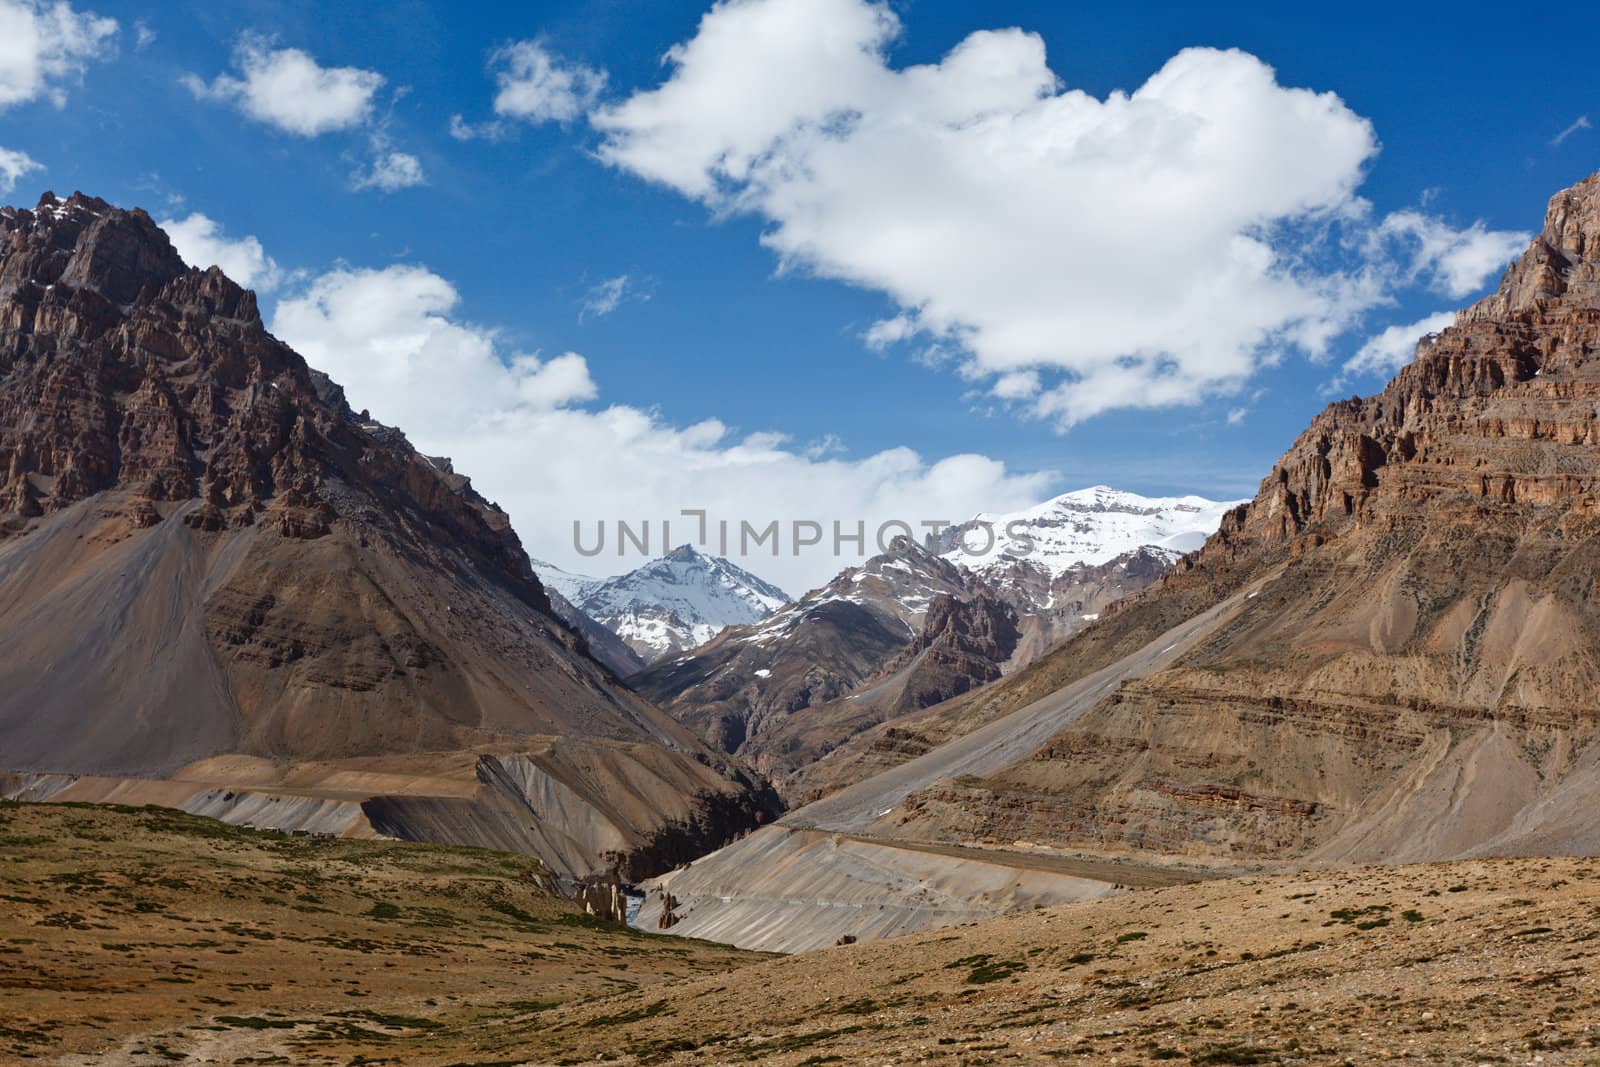 Himalayas. Spiti Valley, Himachal Pradesh, India